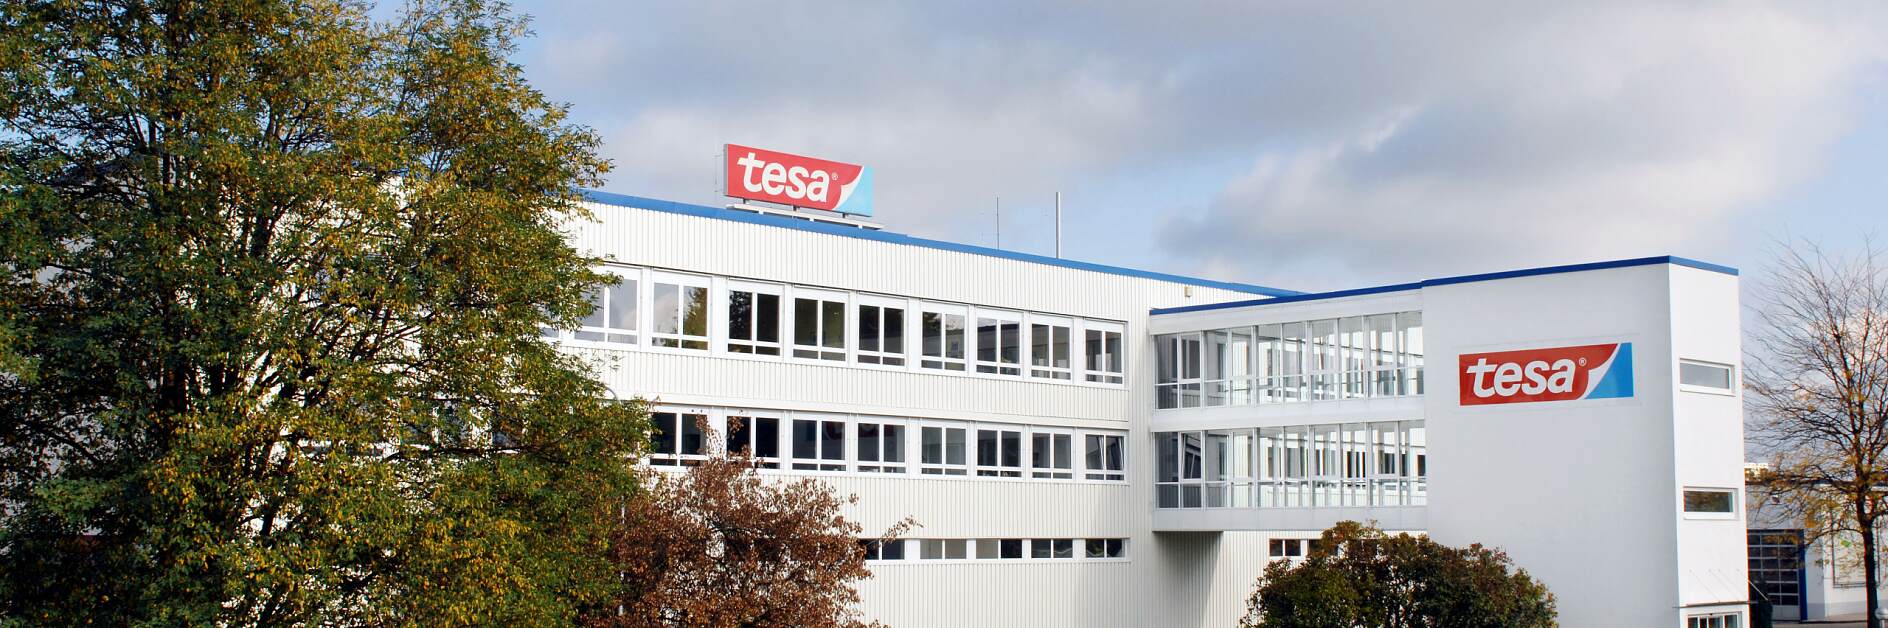 tesa-fabrikken i Offenburg